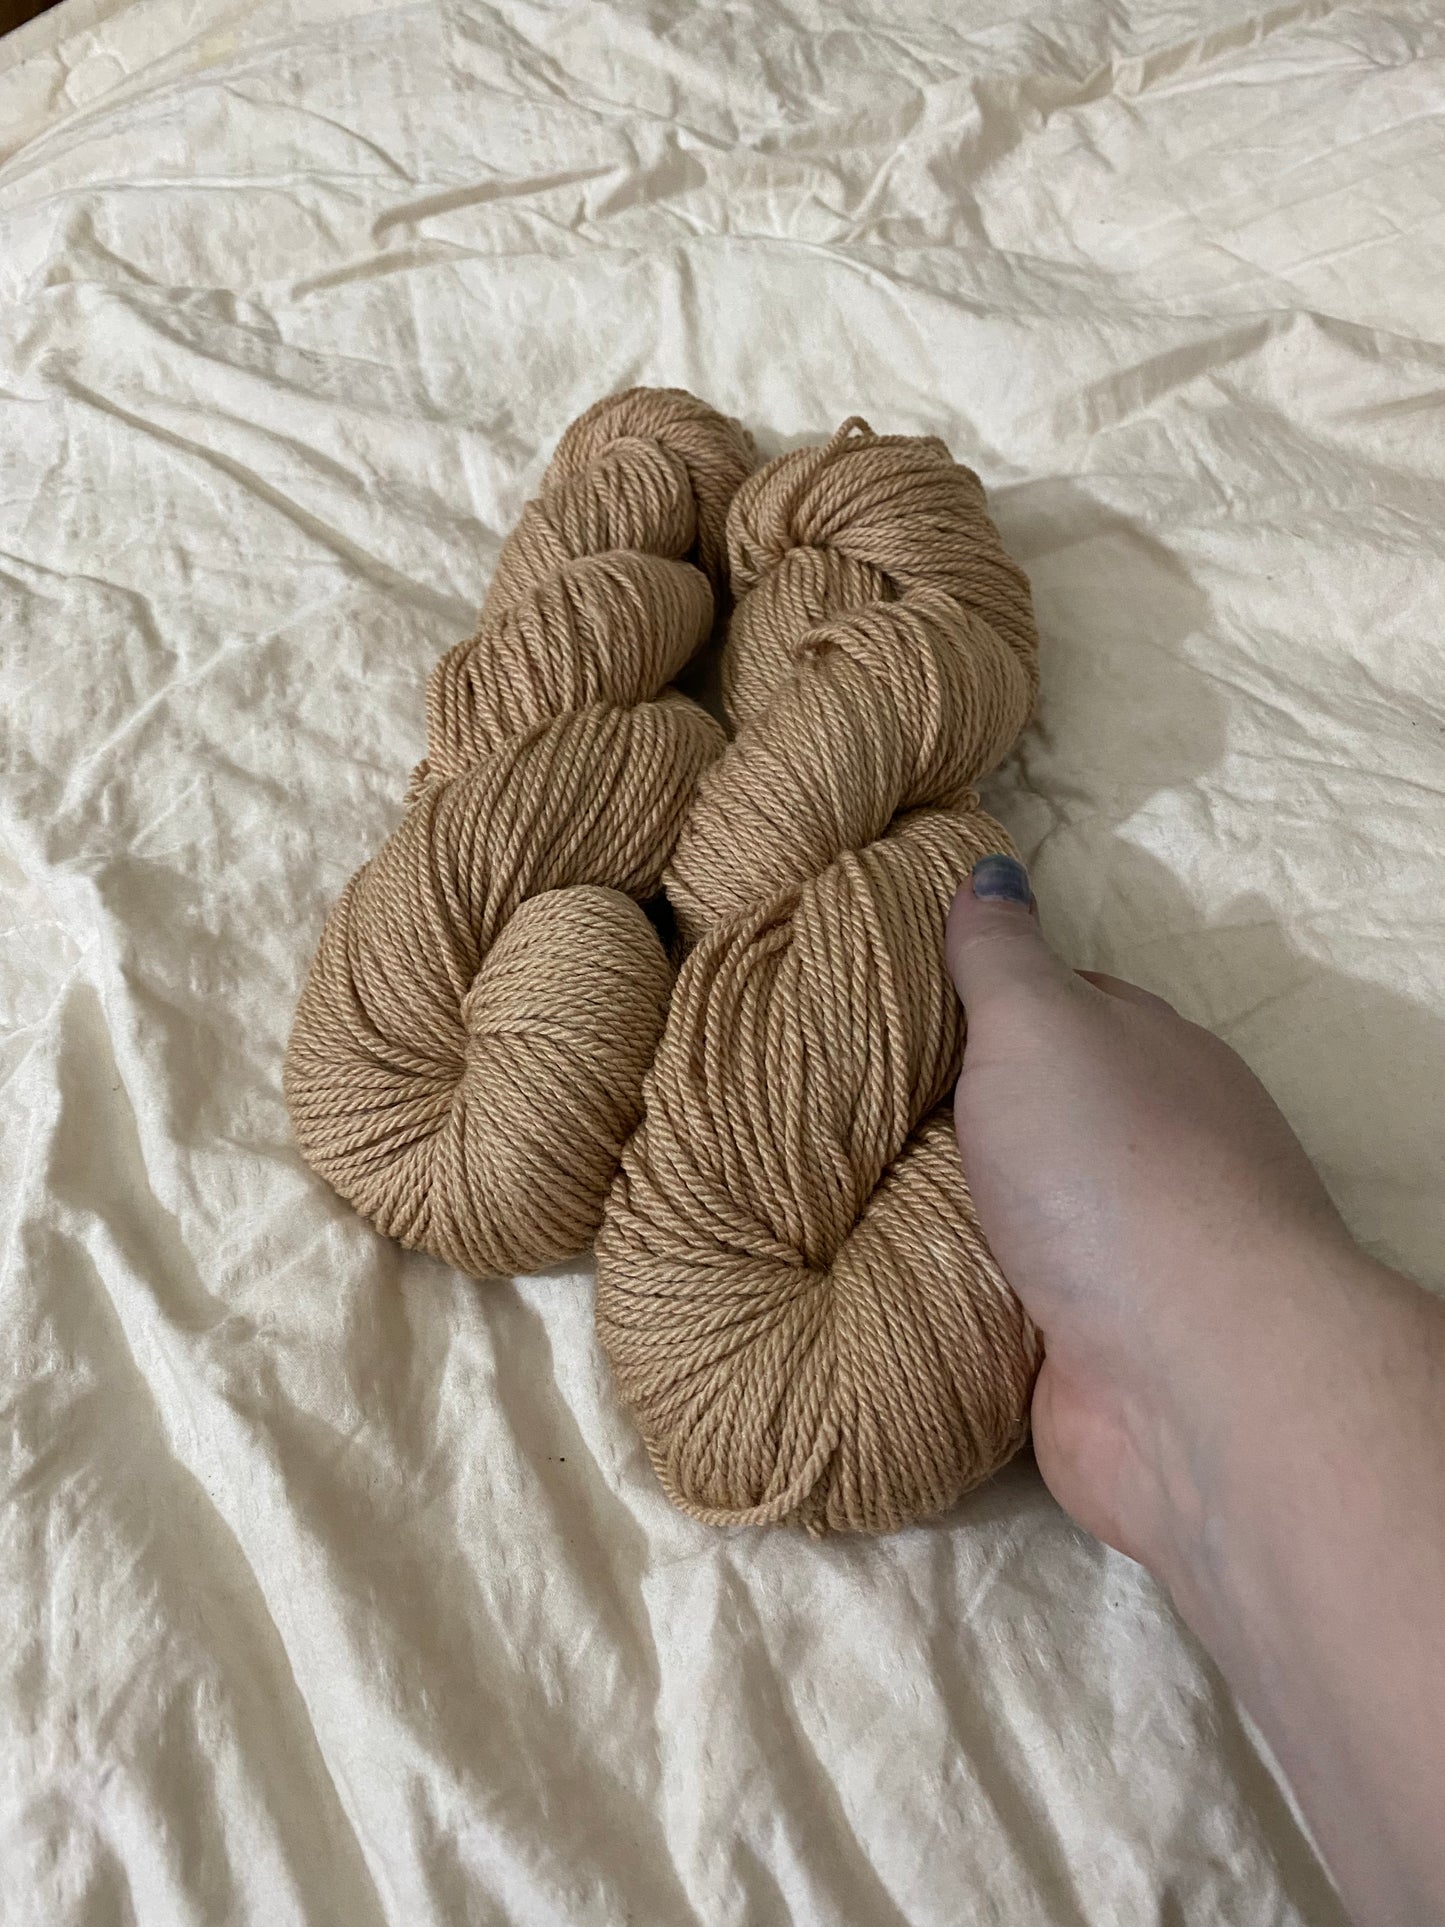 30/70 Merino/ Silk DK Weight Yarn - Sumac Rosewood